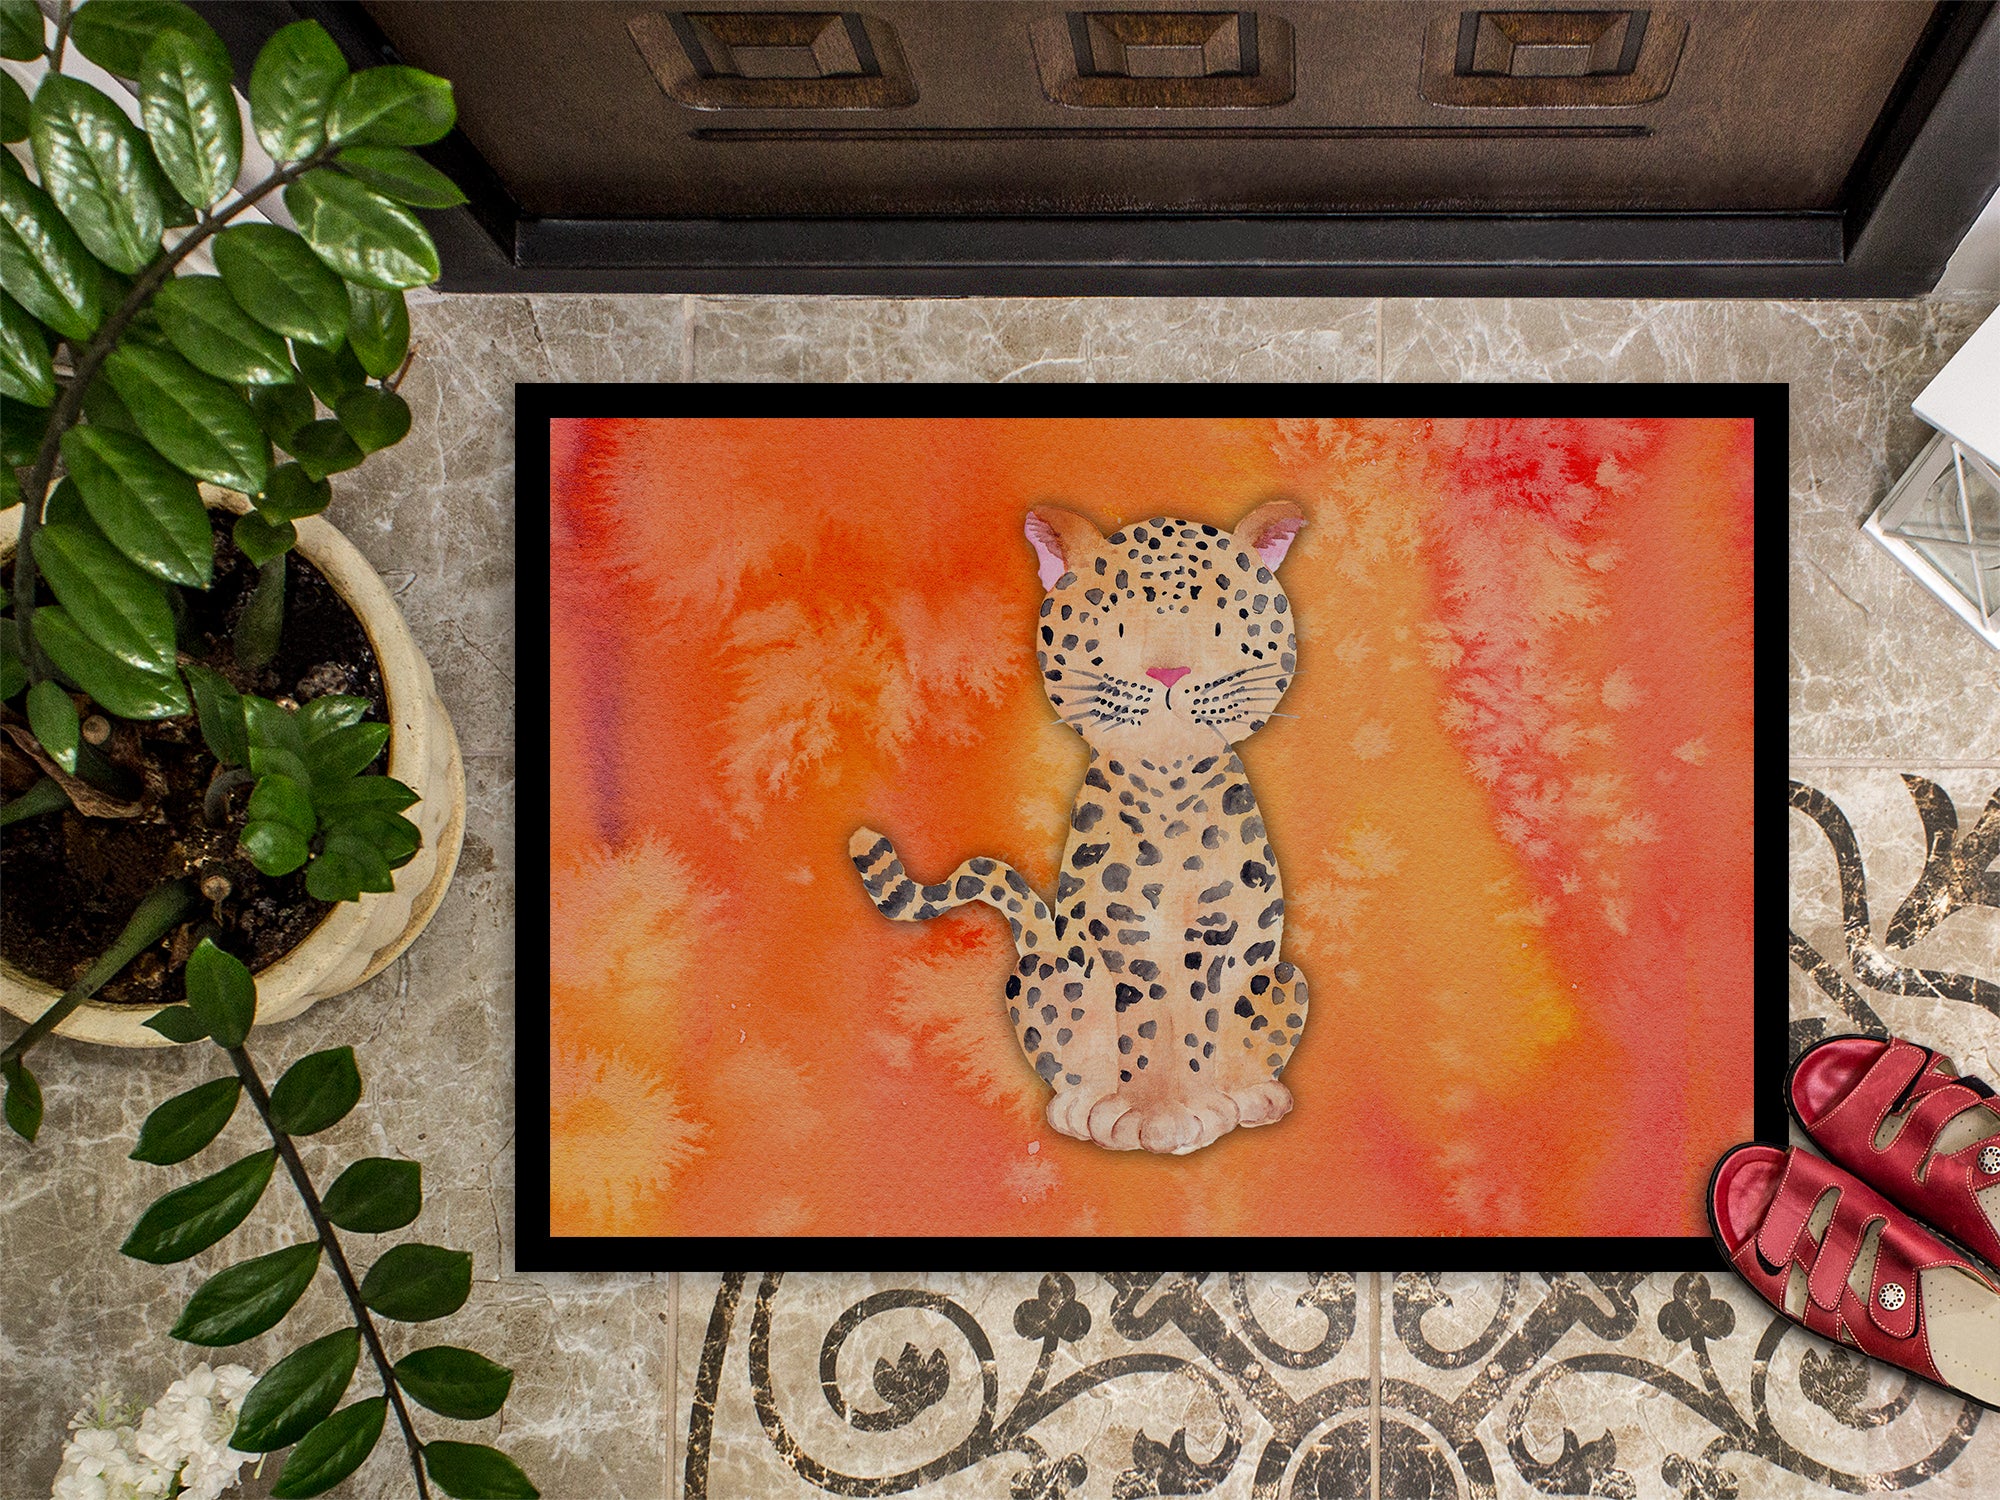 Leopard Watercolor Indoor or Outdoor Mat 18x27 BB7396MAT - the-store.com